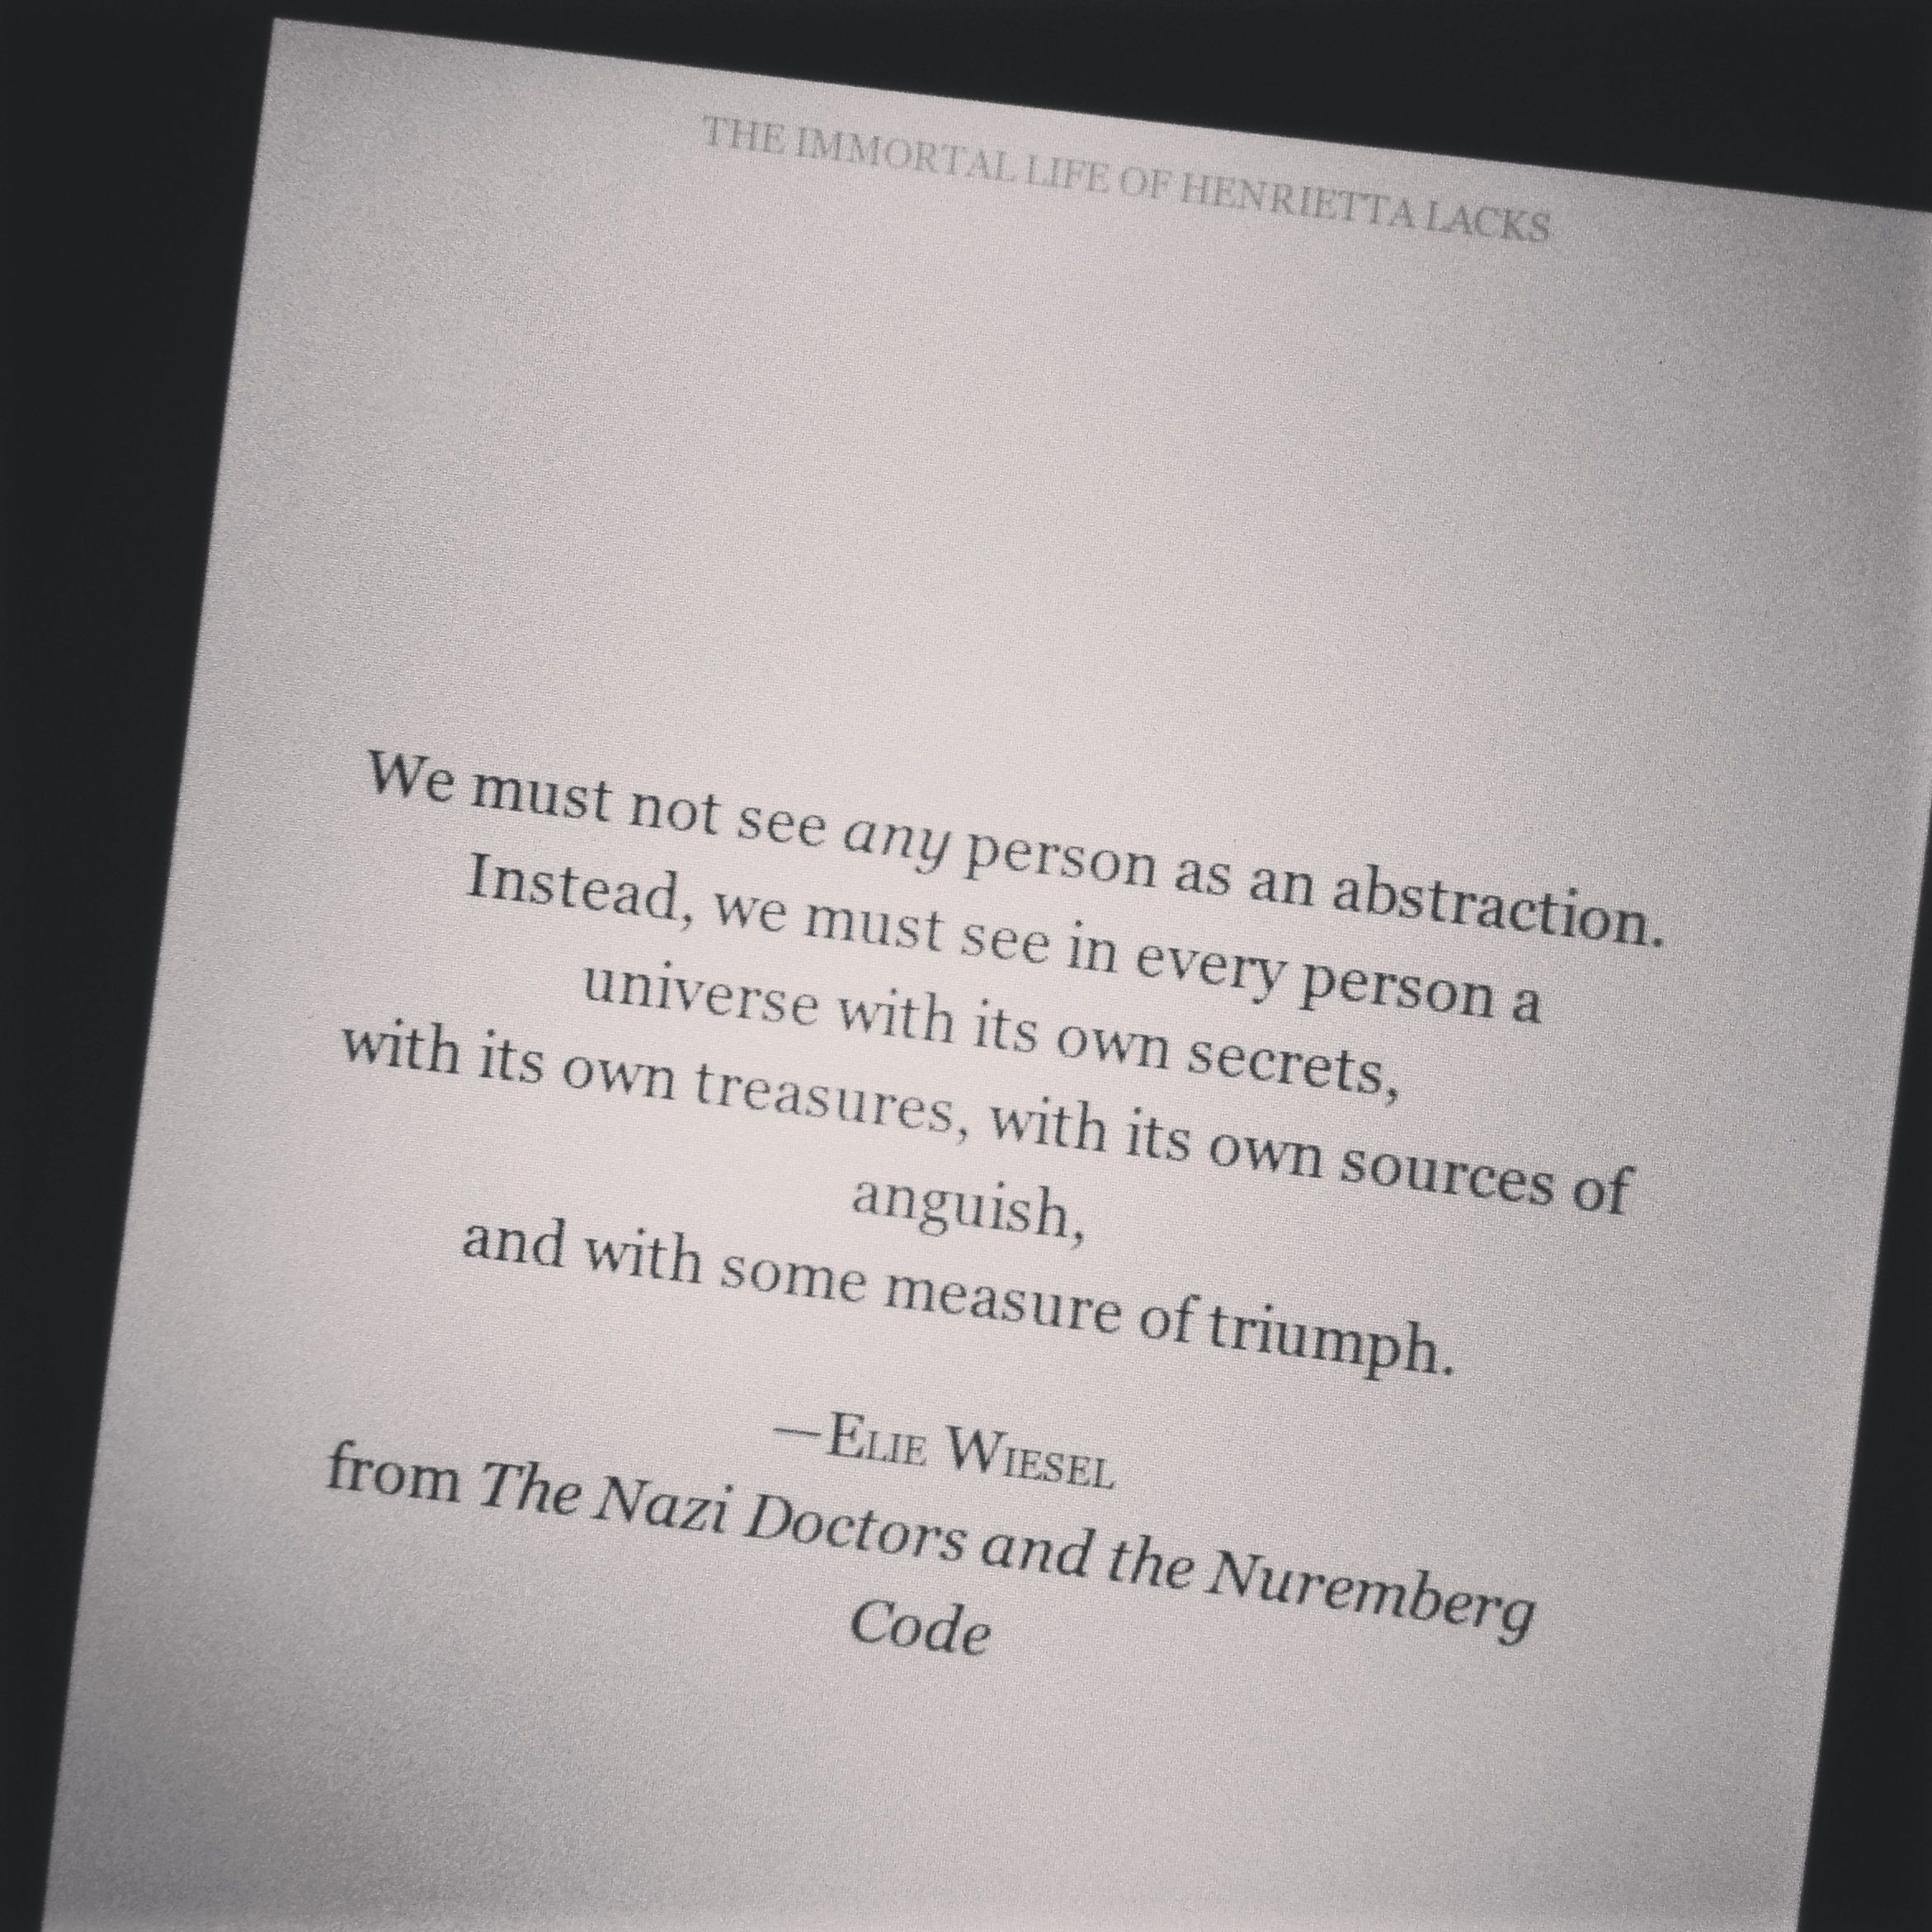 The Immortal Life Of Henrietta Lacks Quotes
 Elie Wiesel quote from "The Immortal Life of Henrietta